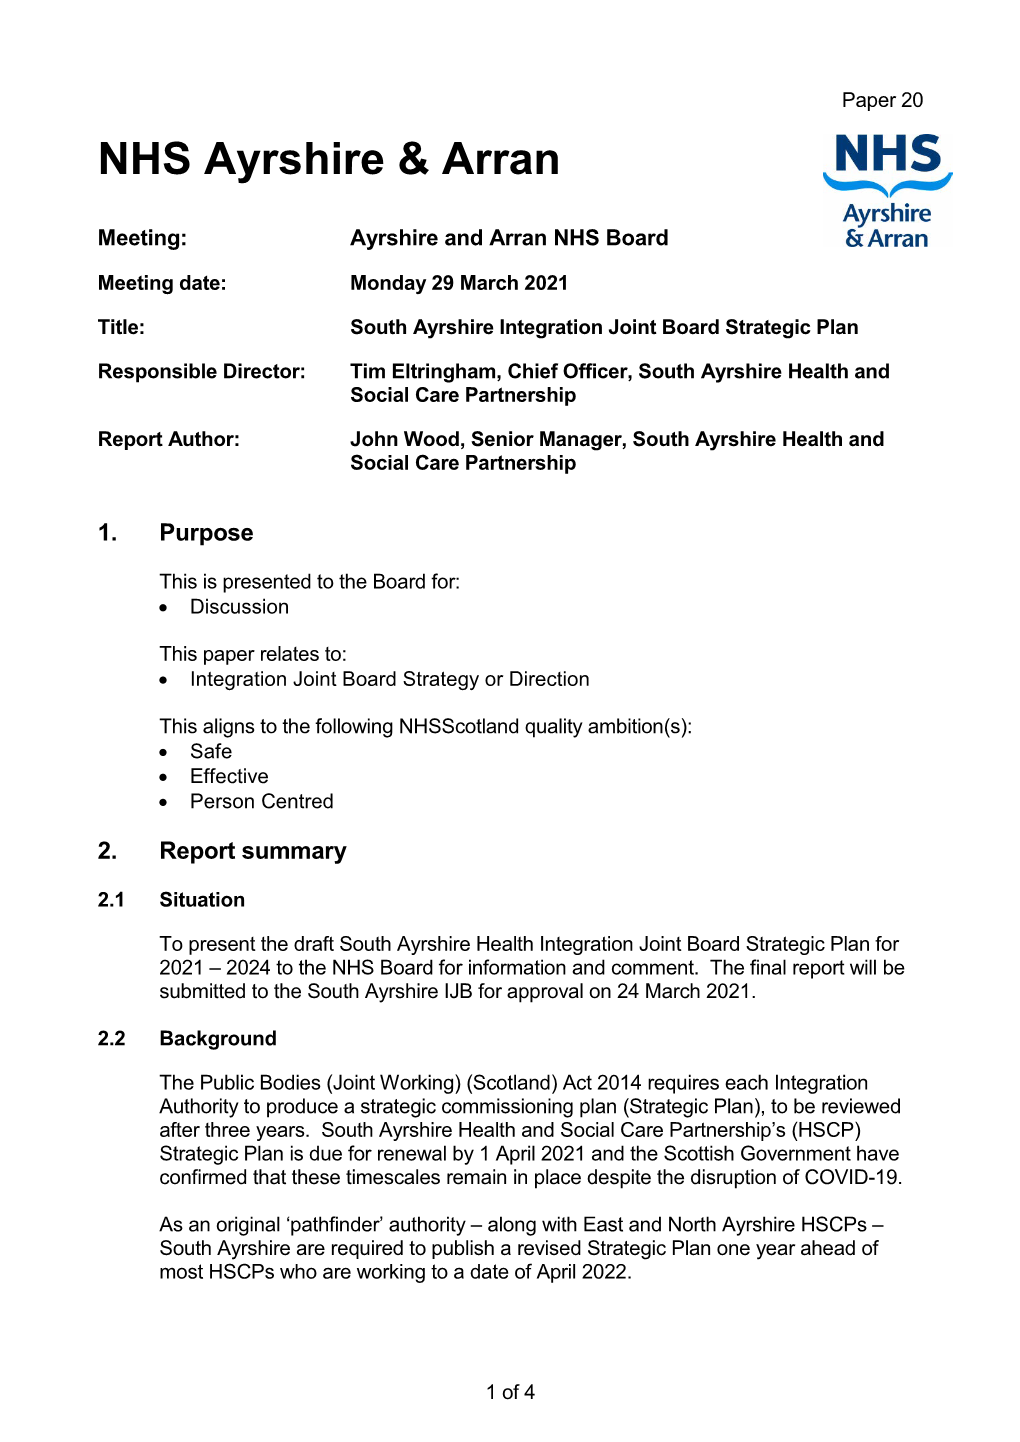 Paper 20: South Ayrshire Strategic Plan